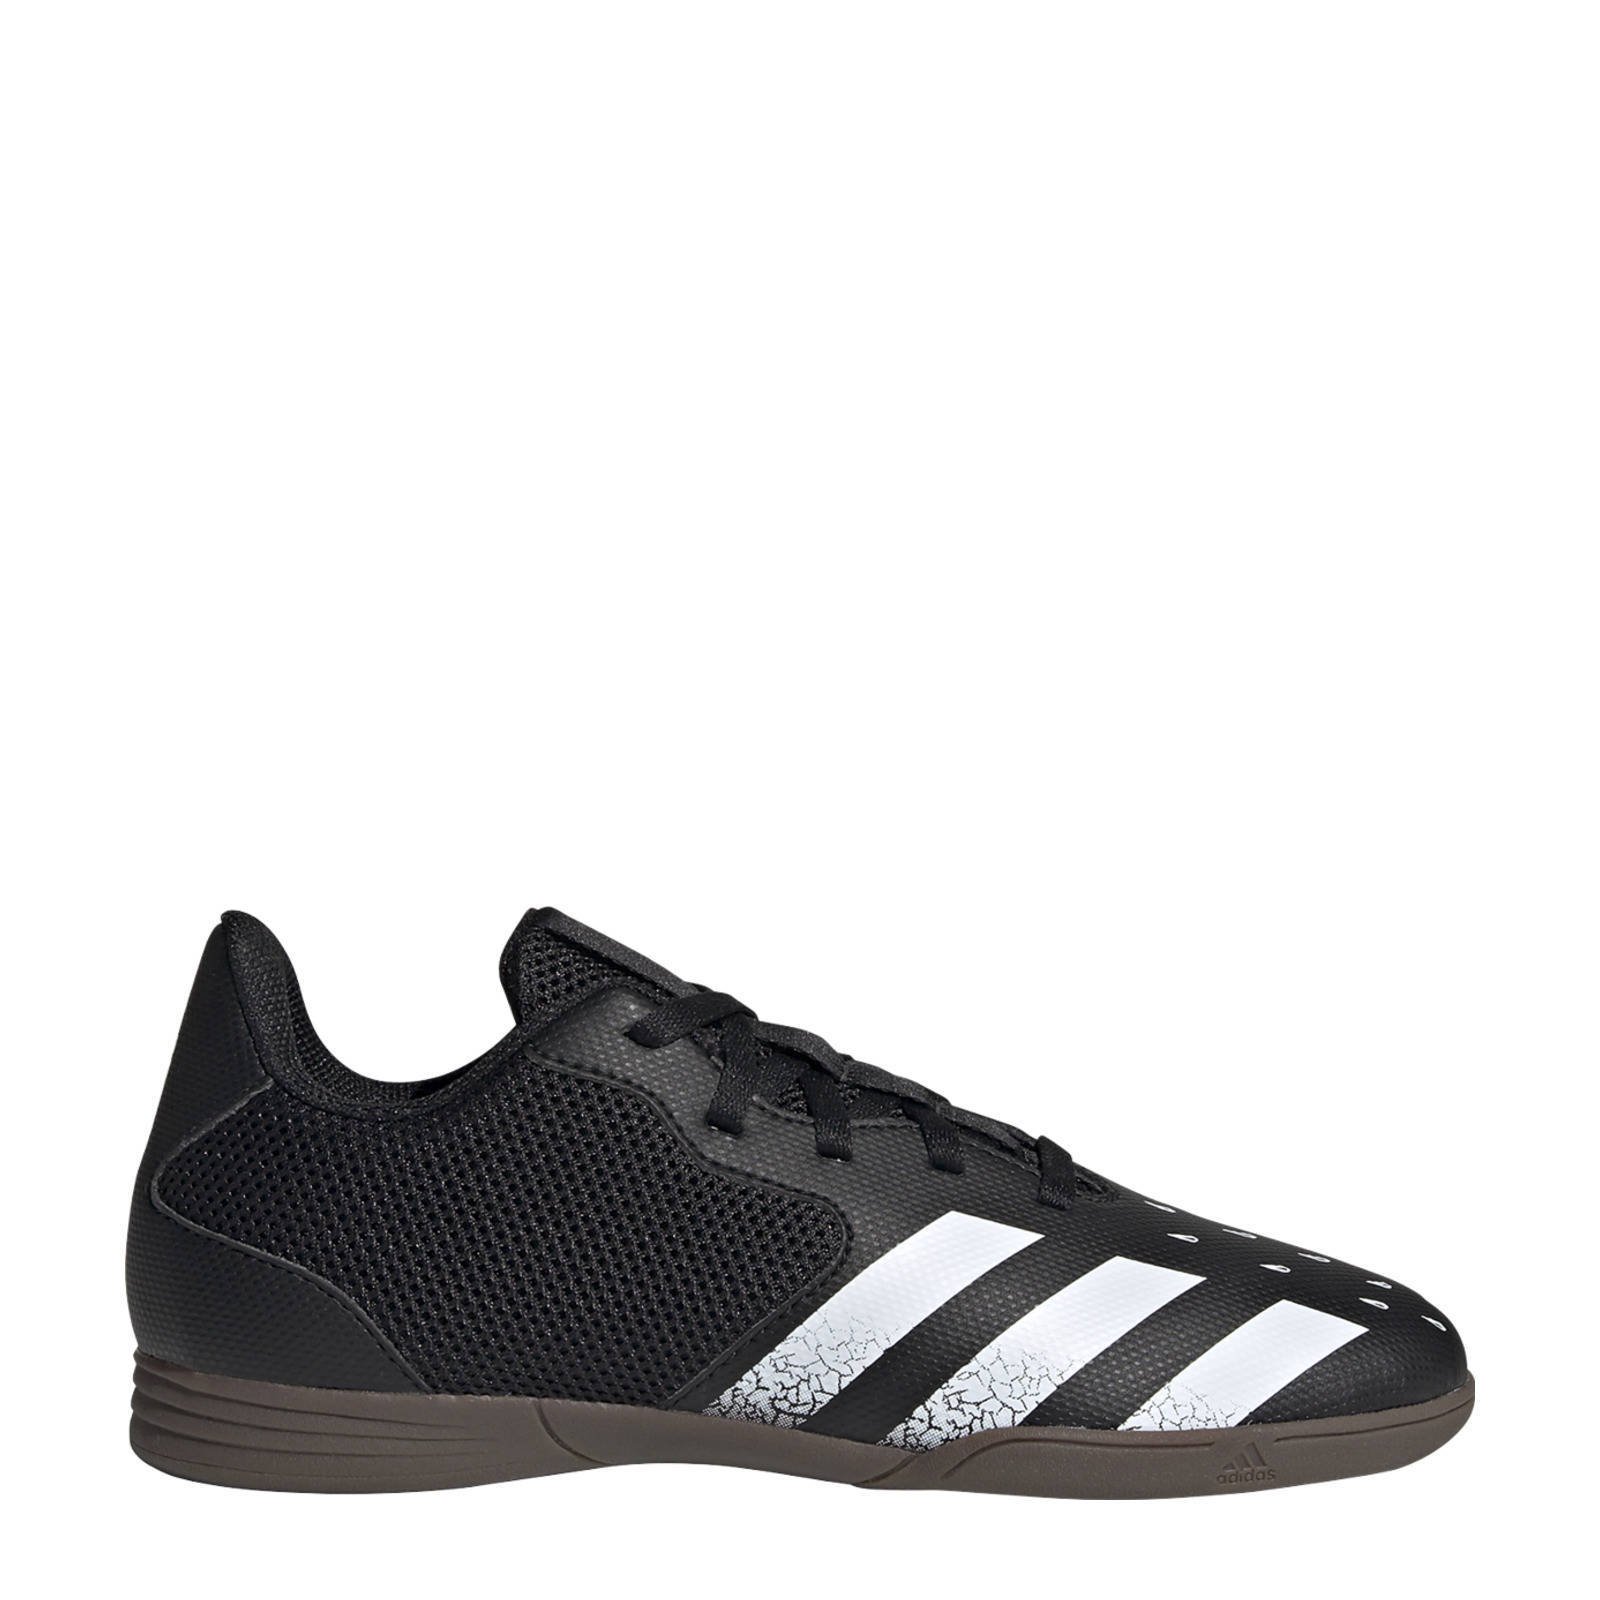 Adidas Performance Predator Freak.4 Sala Jr. zaalvoetbalschoenen zwart/wit online kopen